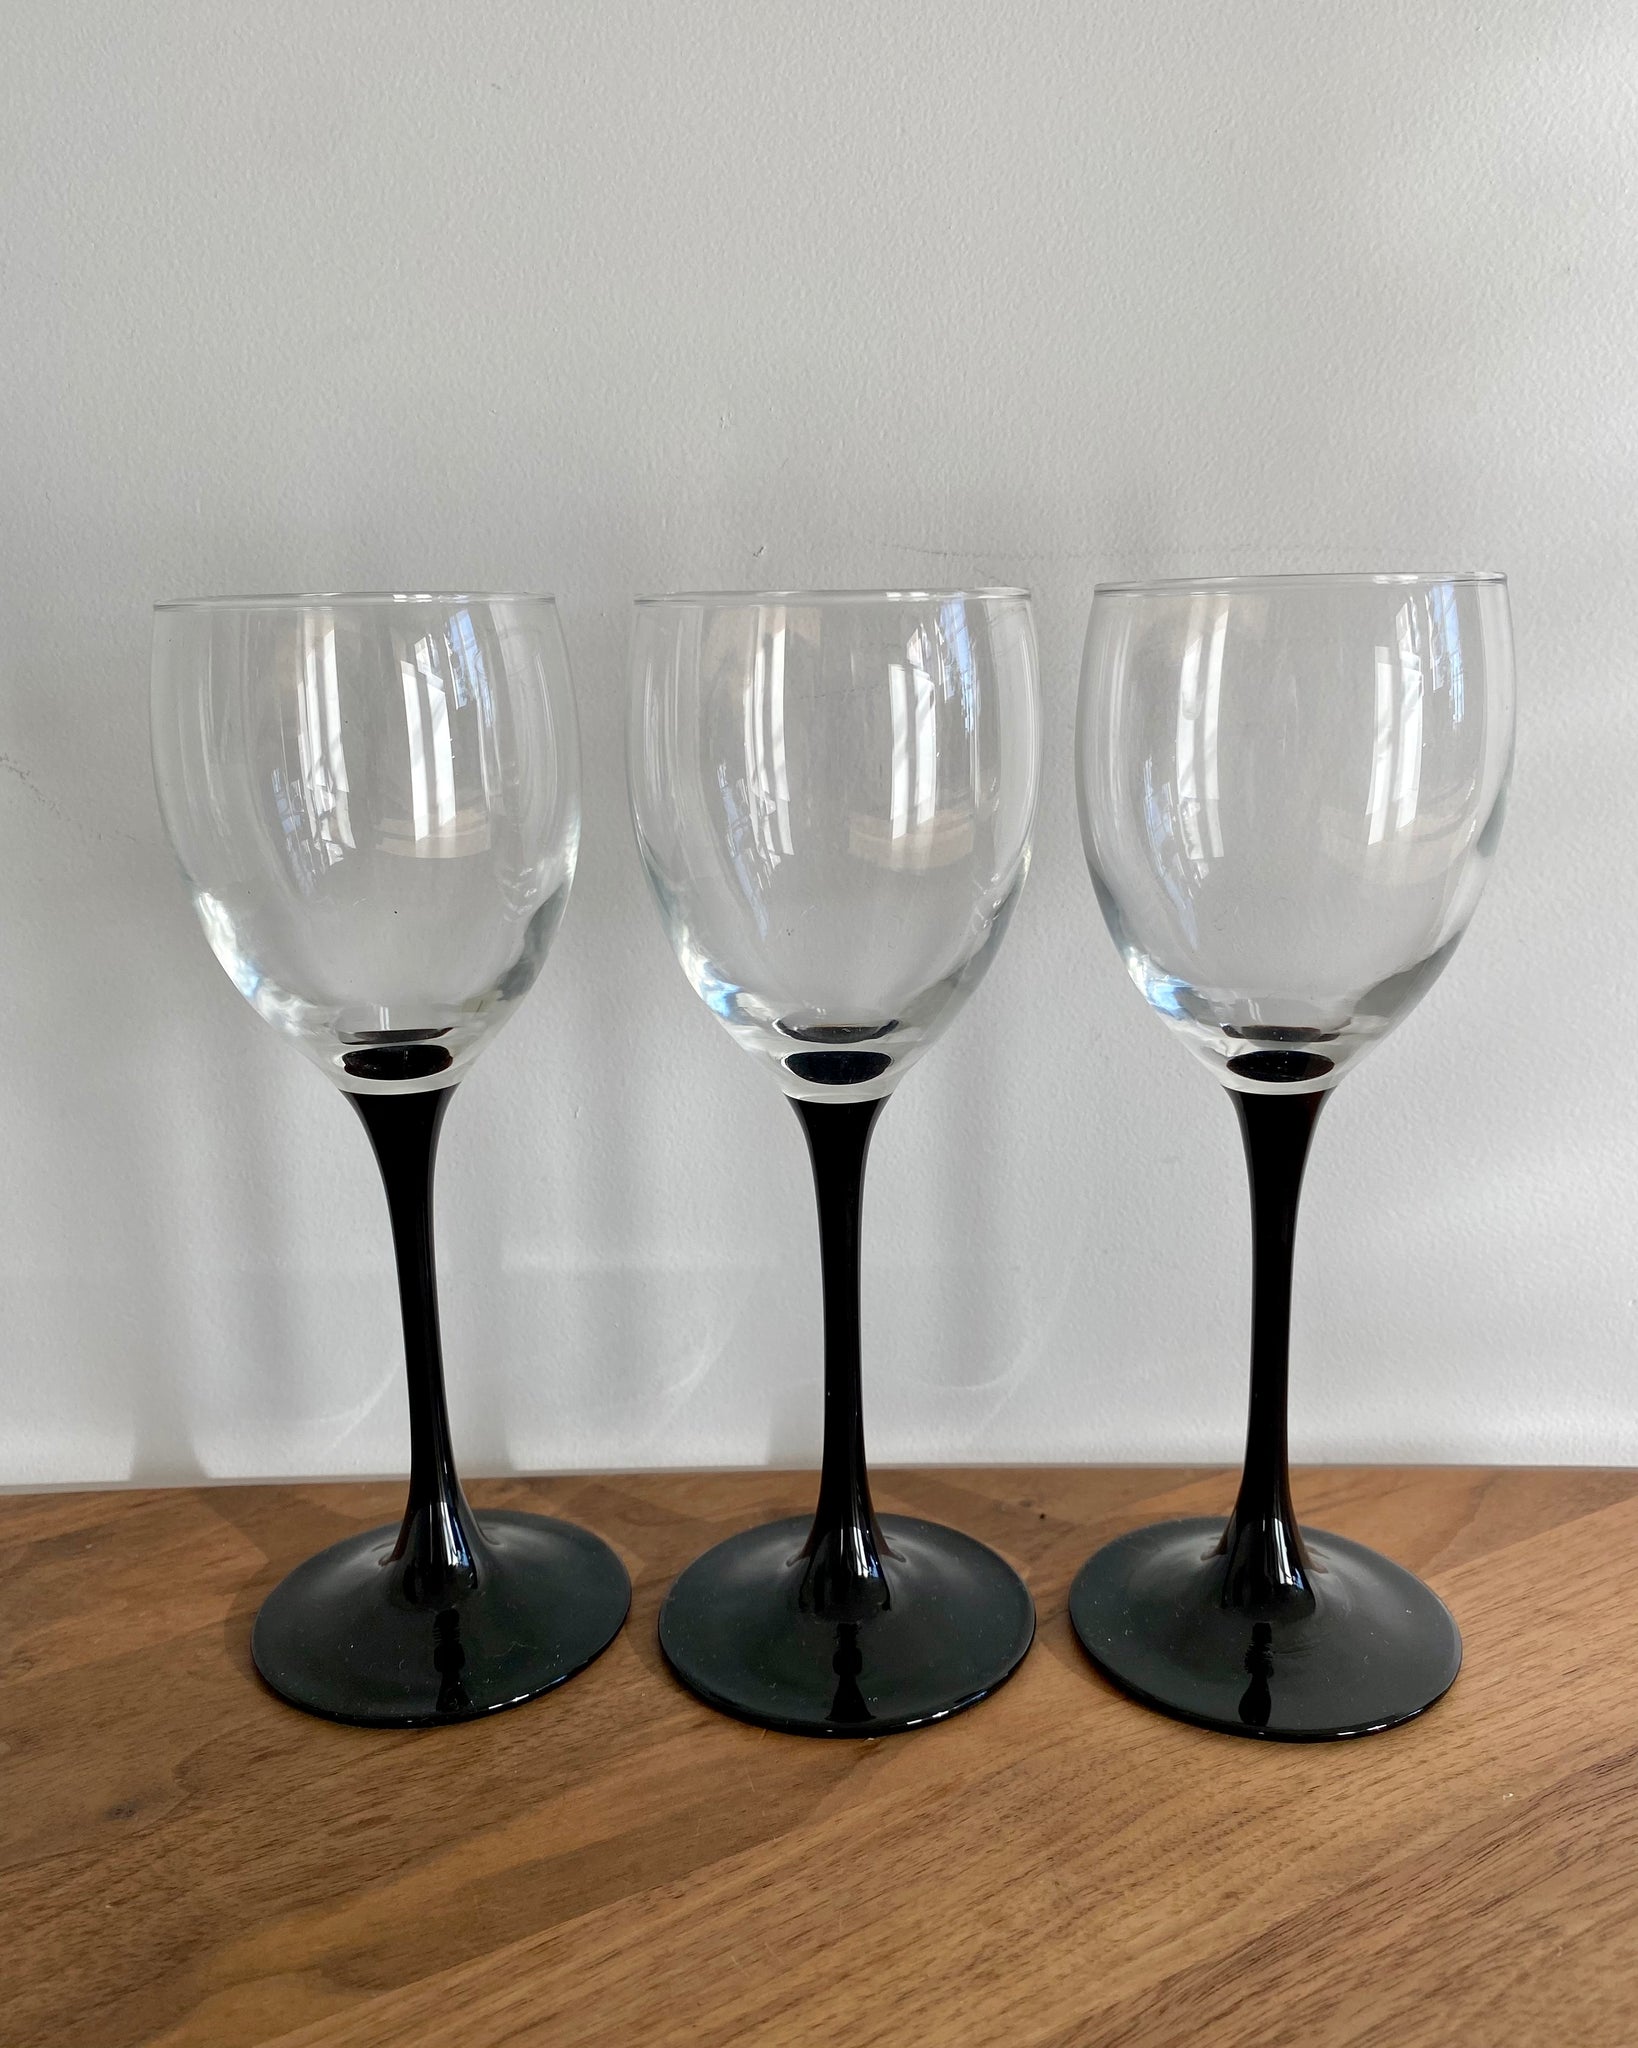 Wine glasses Luminarc set of 3 (PICK UP ONLY!)